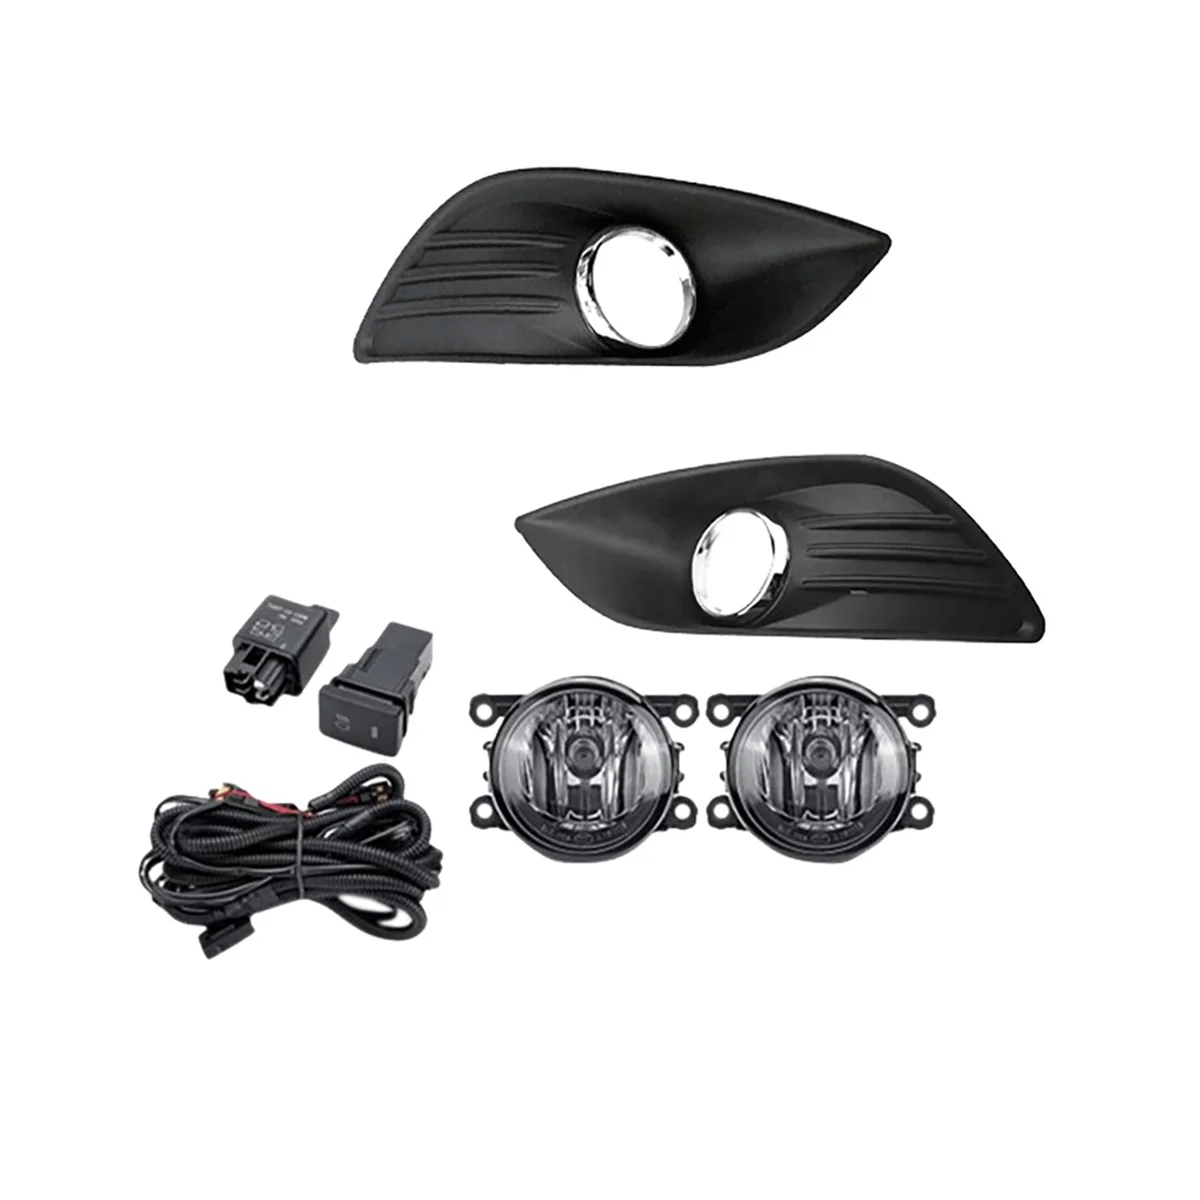 

Галогенная противотуманная лампа, оболочка для противотуманной фары, ободок для автомобиля Ford Focus MK2 2009-2011